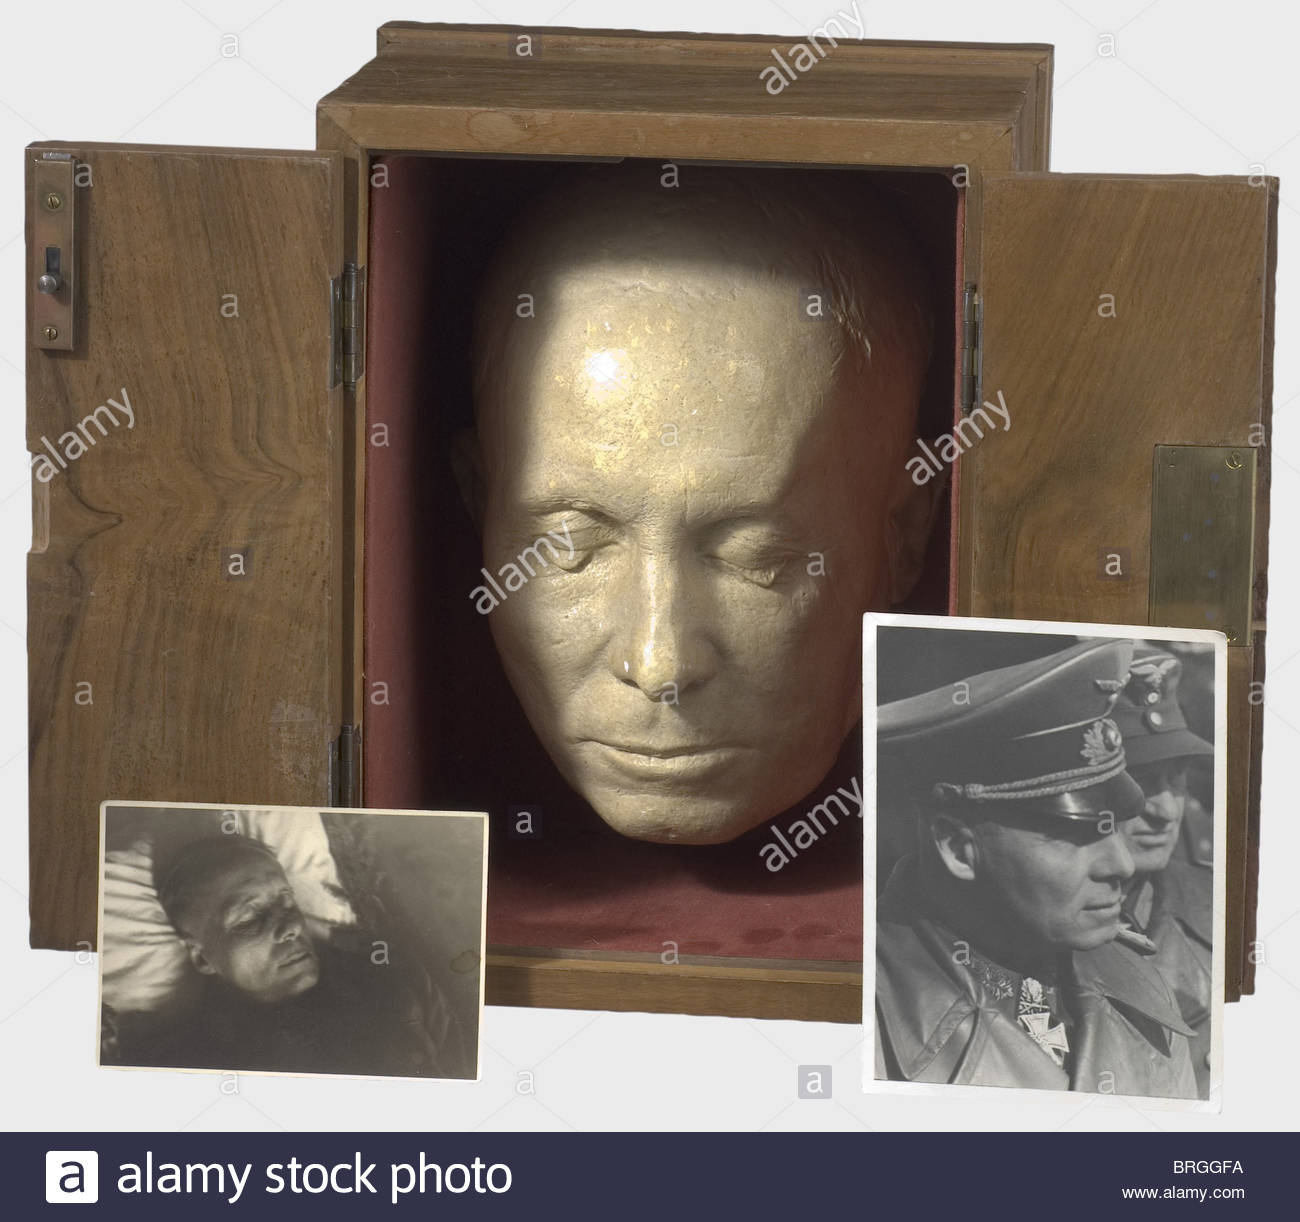 Erwin Rommel Stock Photos Image